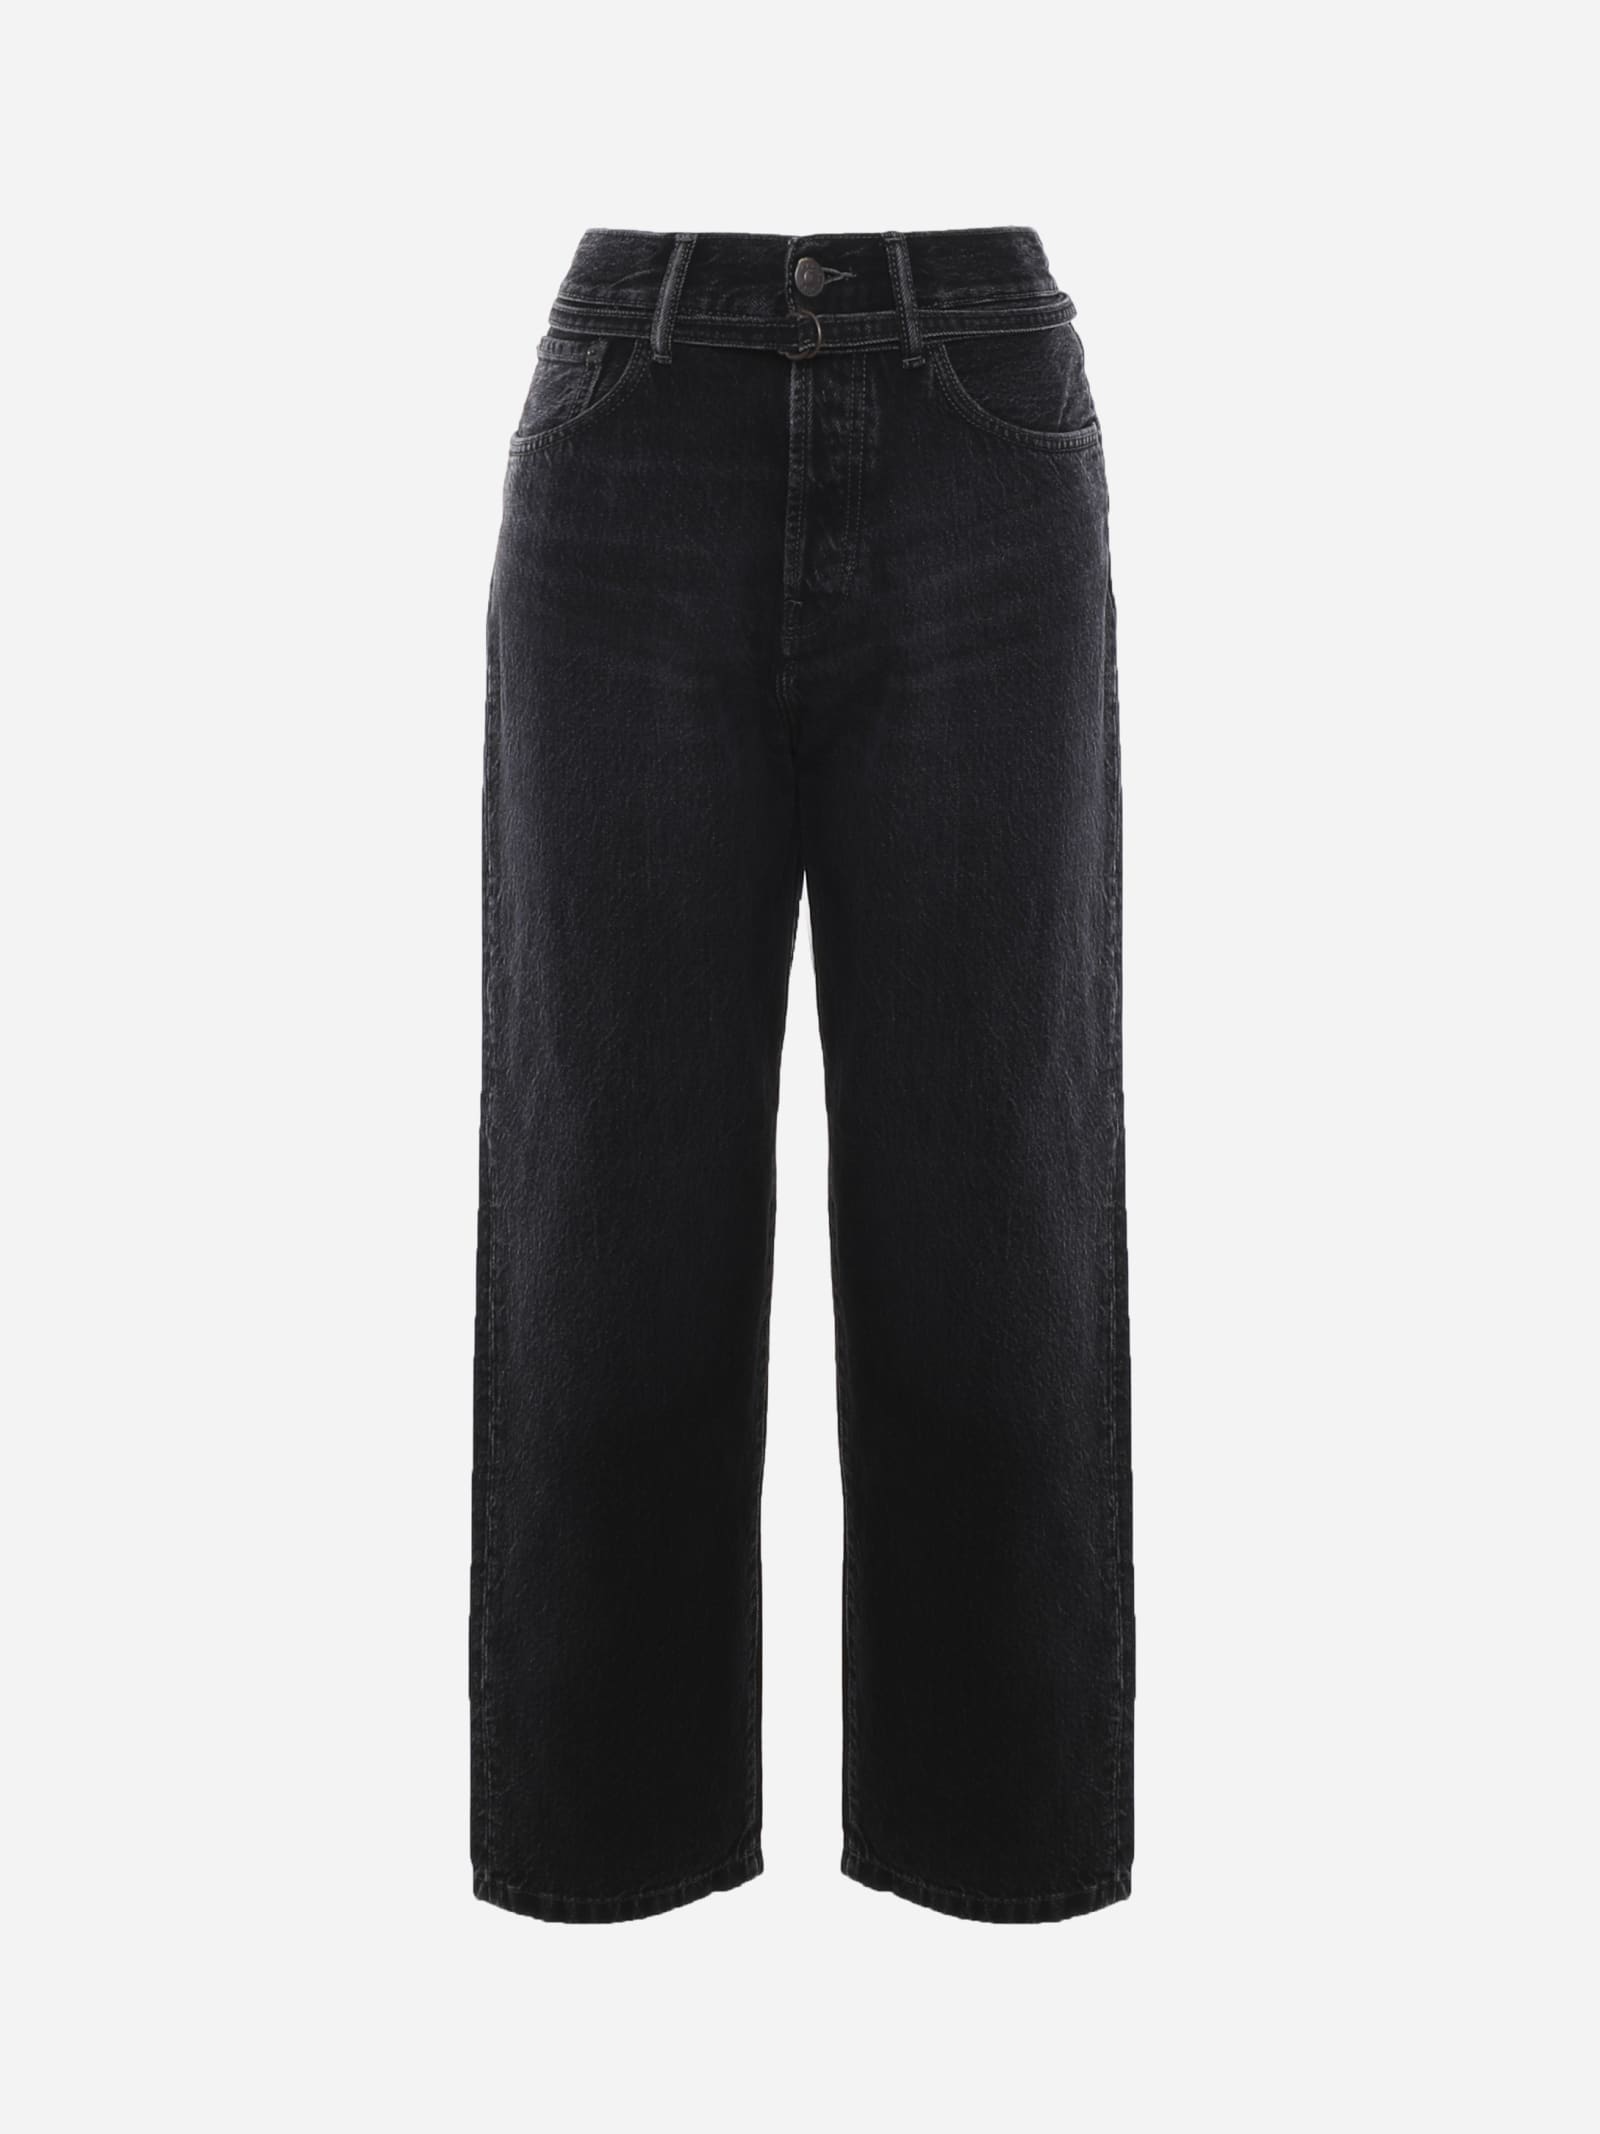 Acne Studios Loose Fit Black Jeans Made Of Cotton Denim